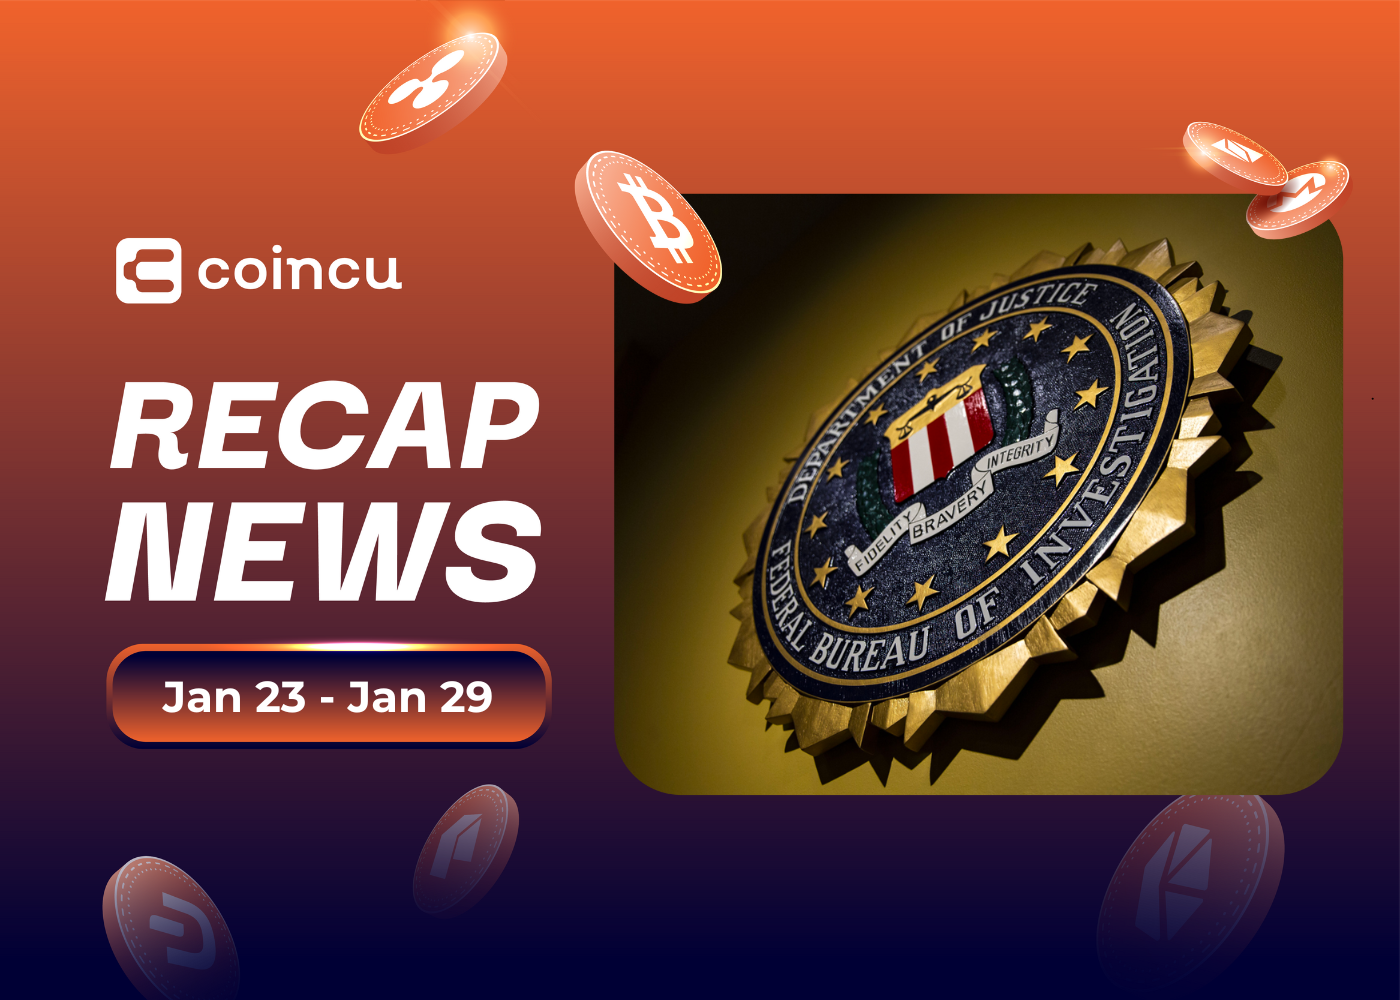 Weekly Top Crypto News (Jan 23 - Jan 29)